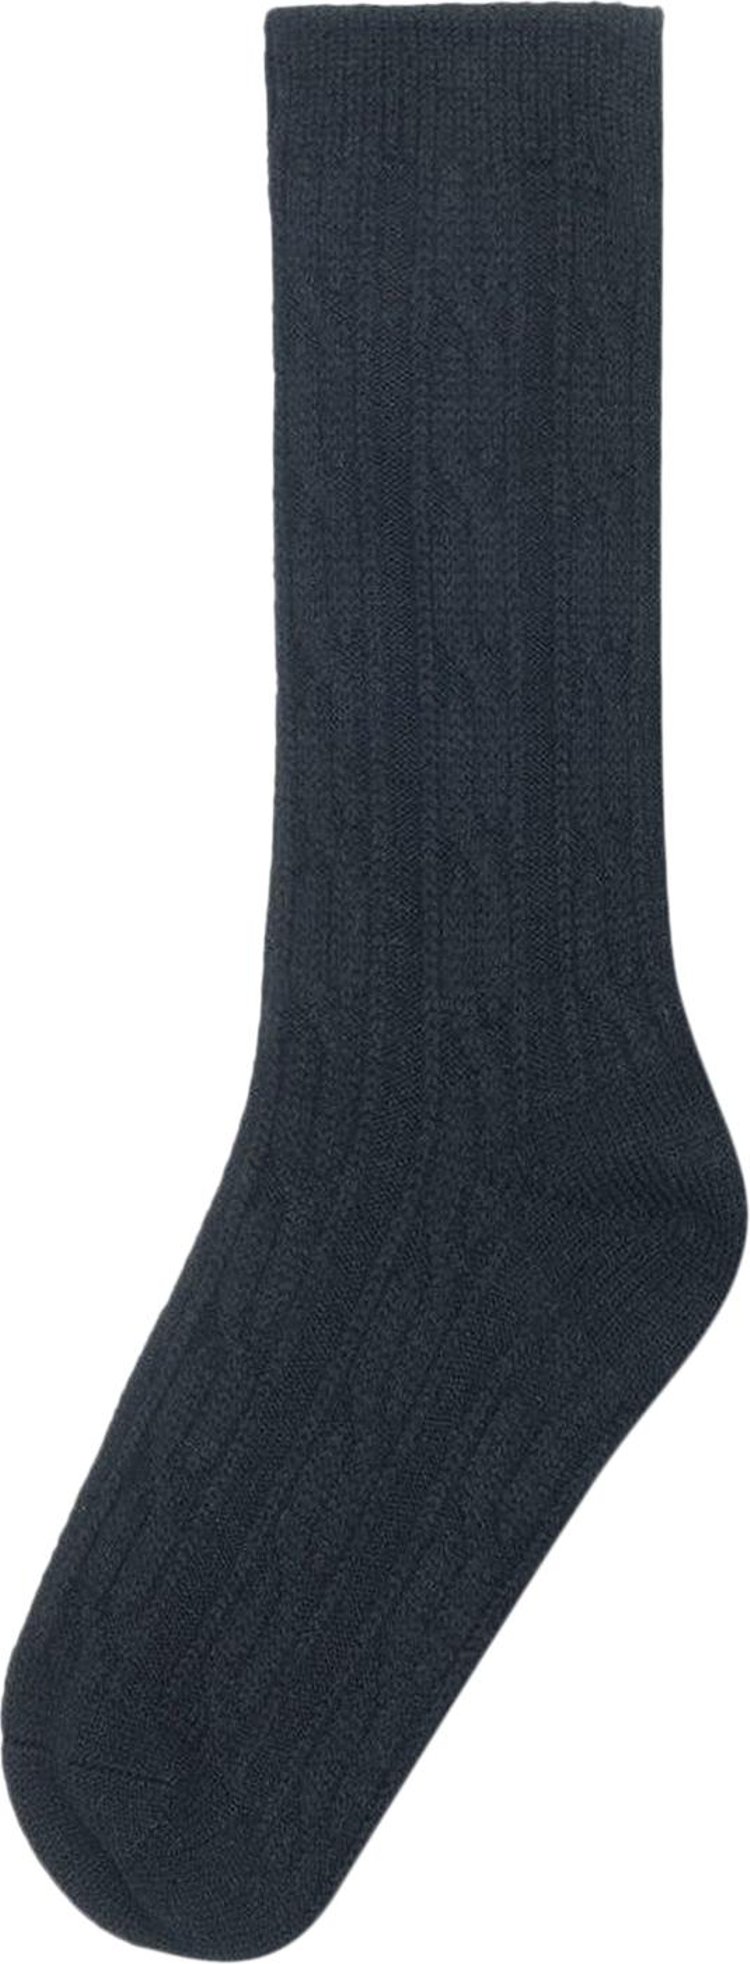 Stussy Cable Knit S Dress Socks 'Black'